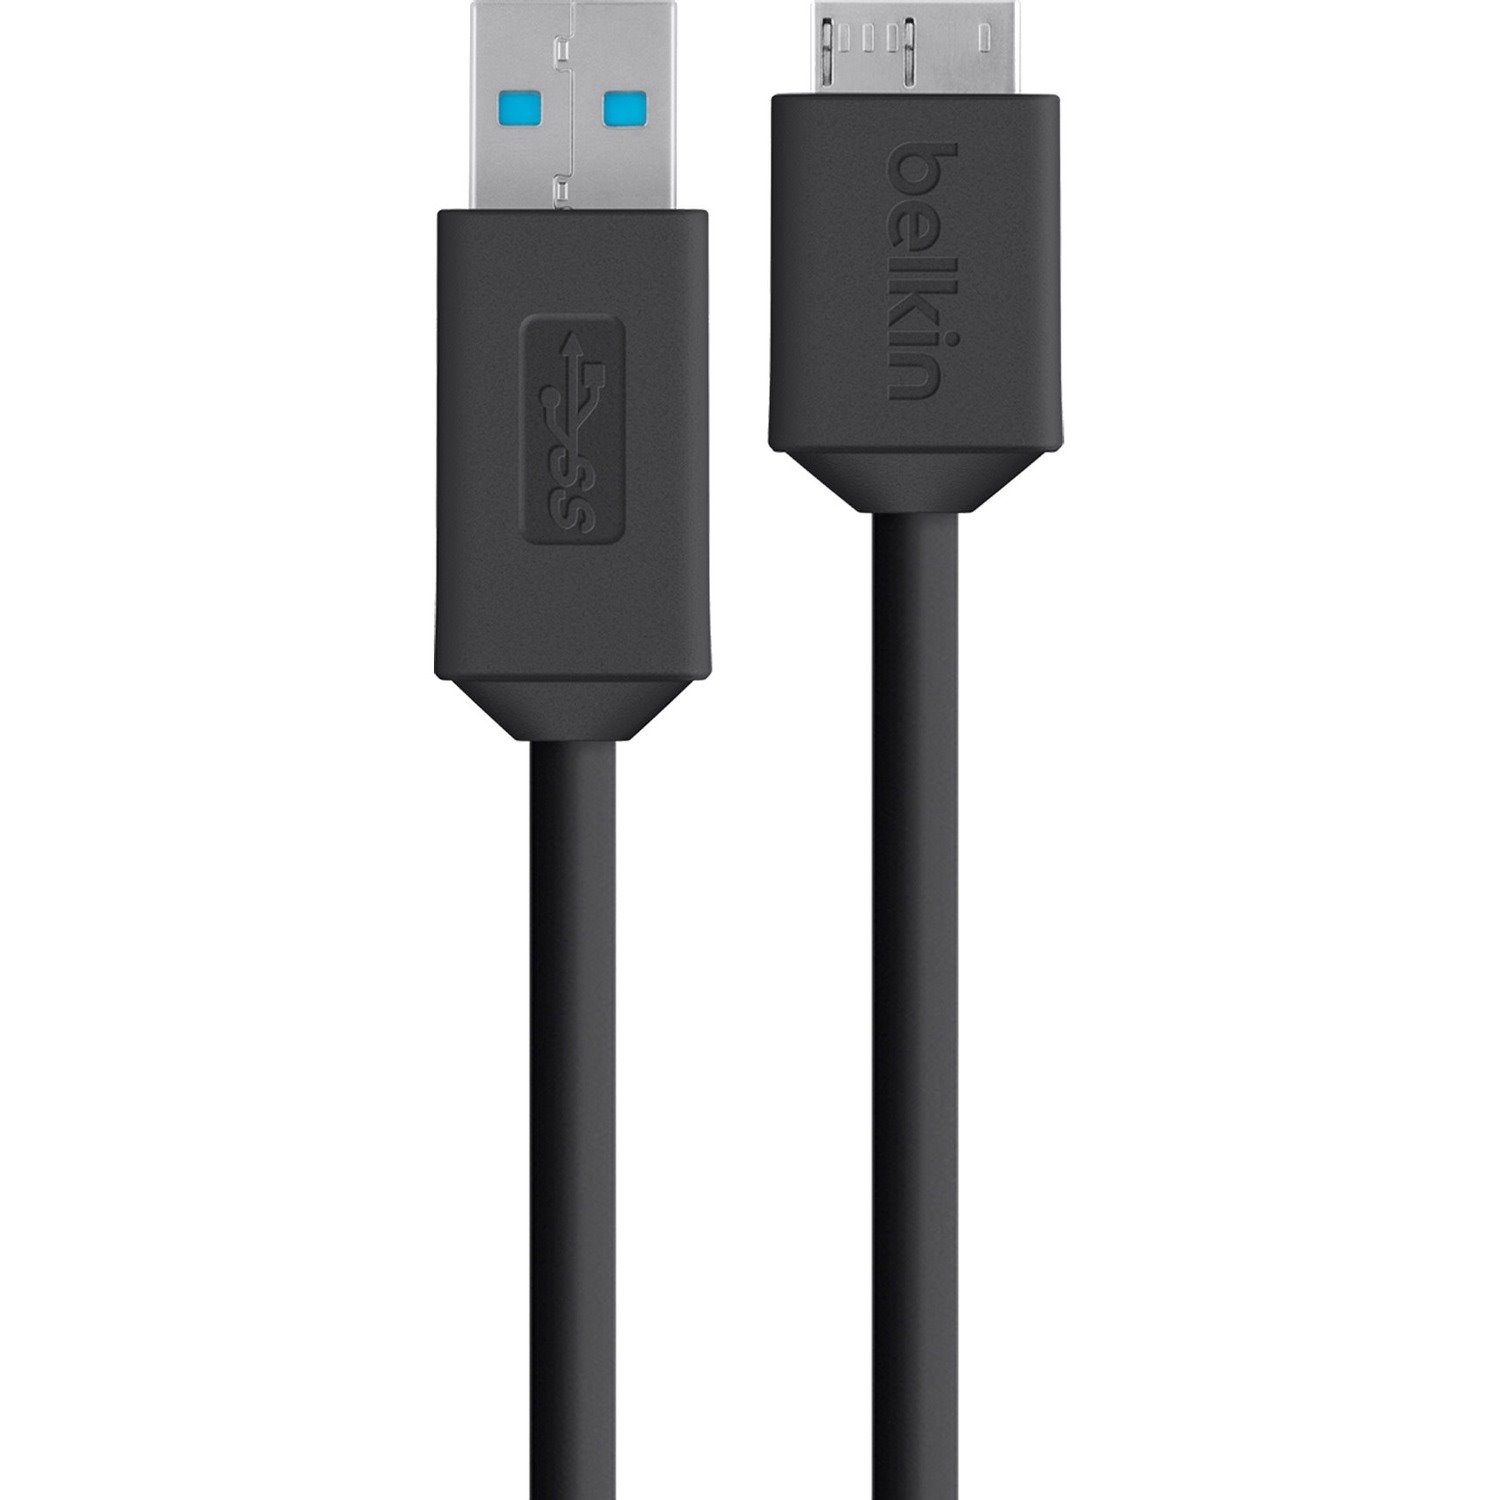 Belkin 90 cm USB Data Transfer Cable for Cellular Phone, Tablet